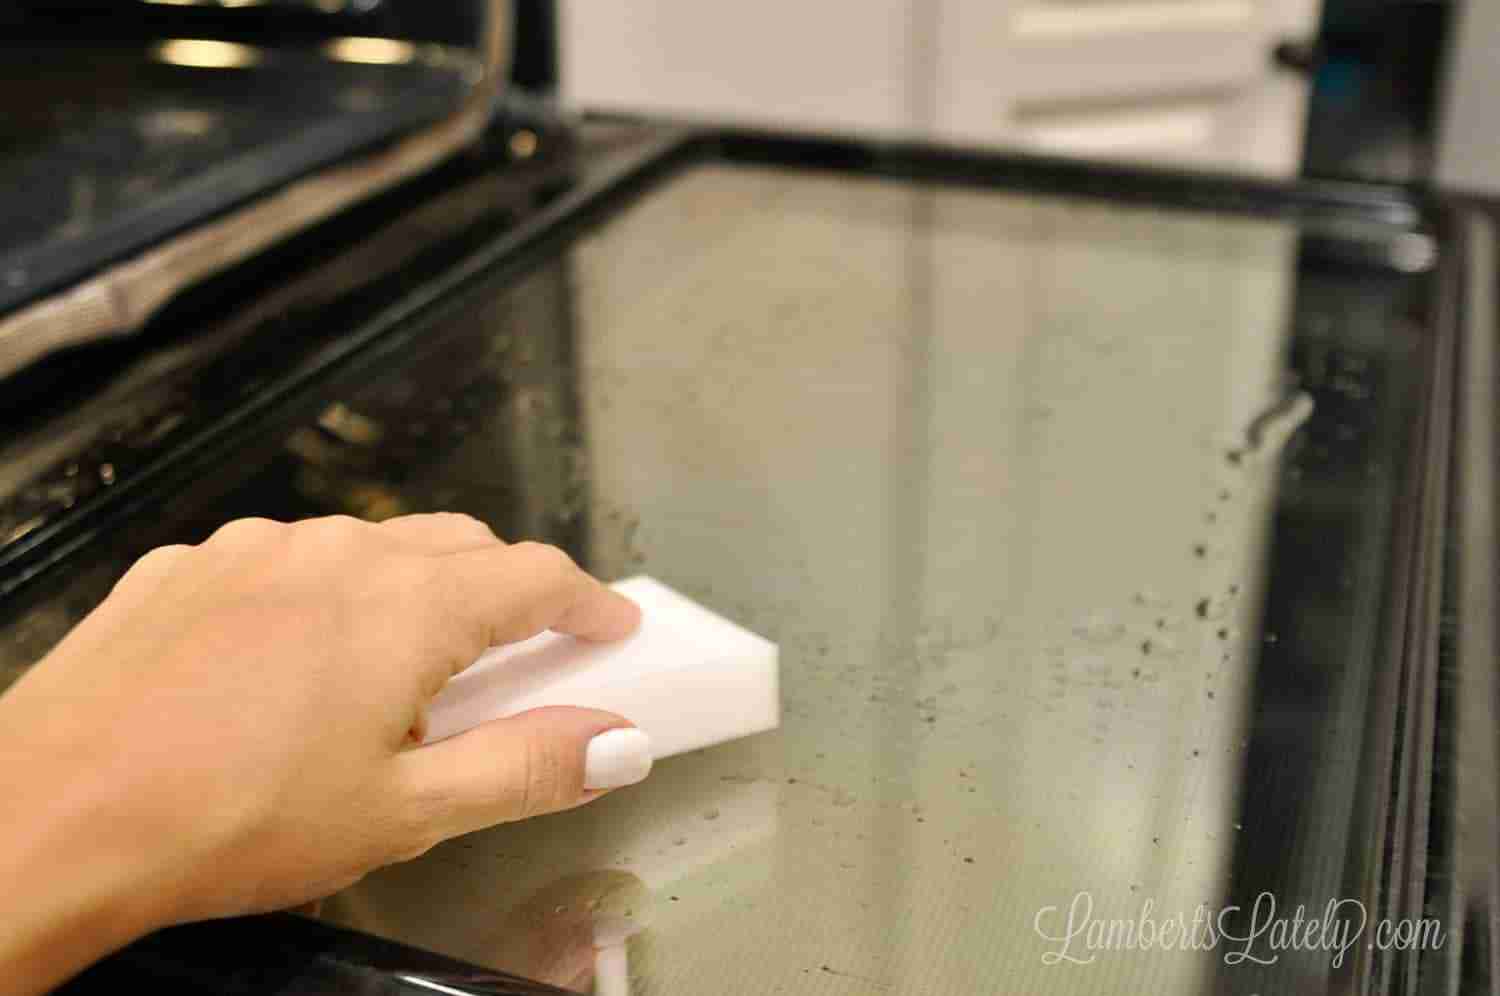 scrubbing an oven door's glass with a melamine sponge